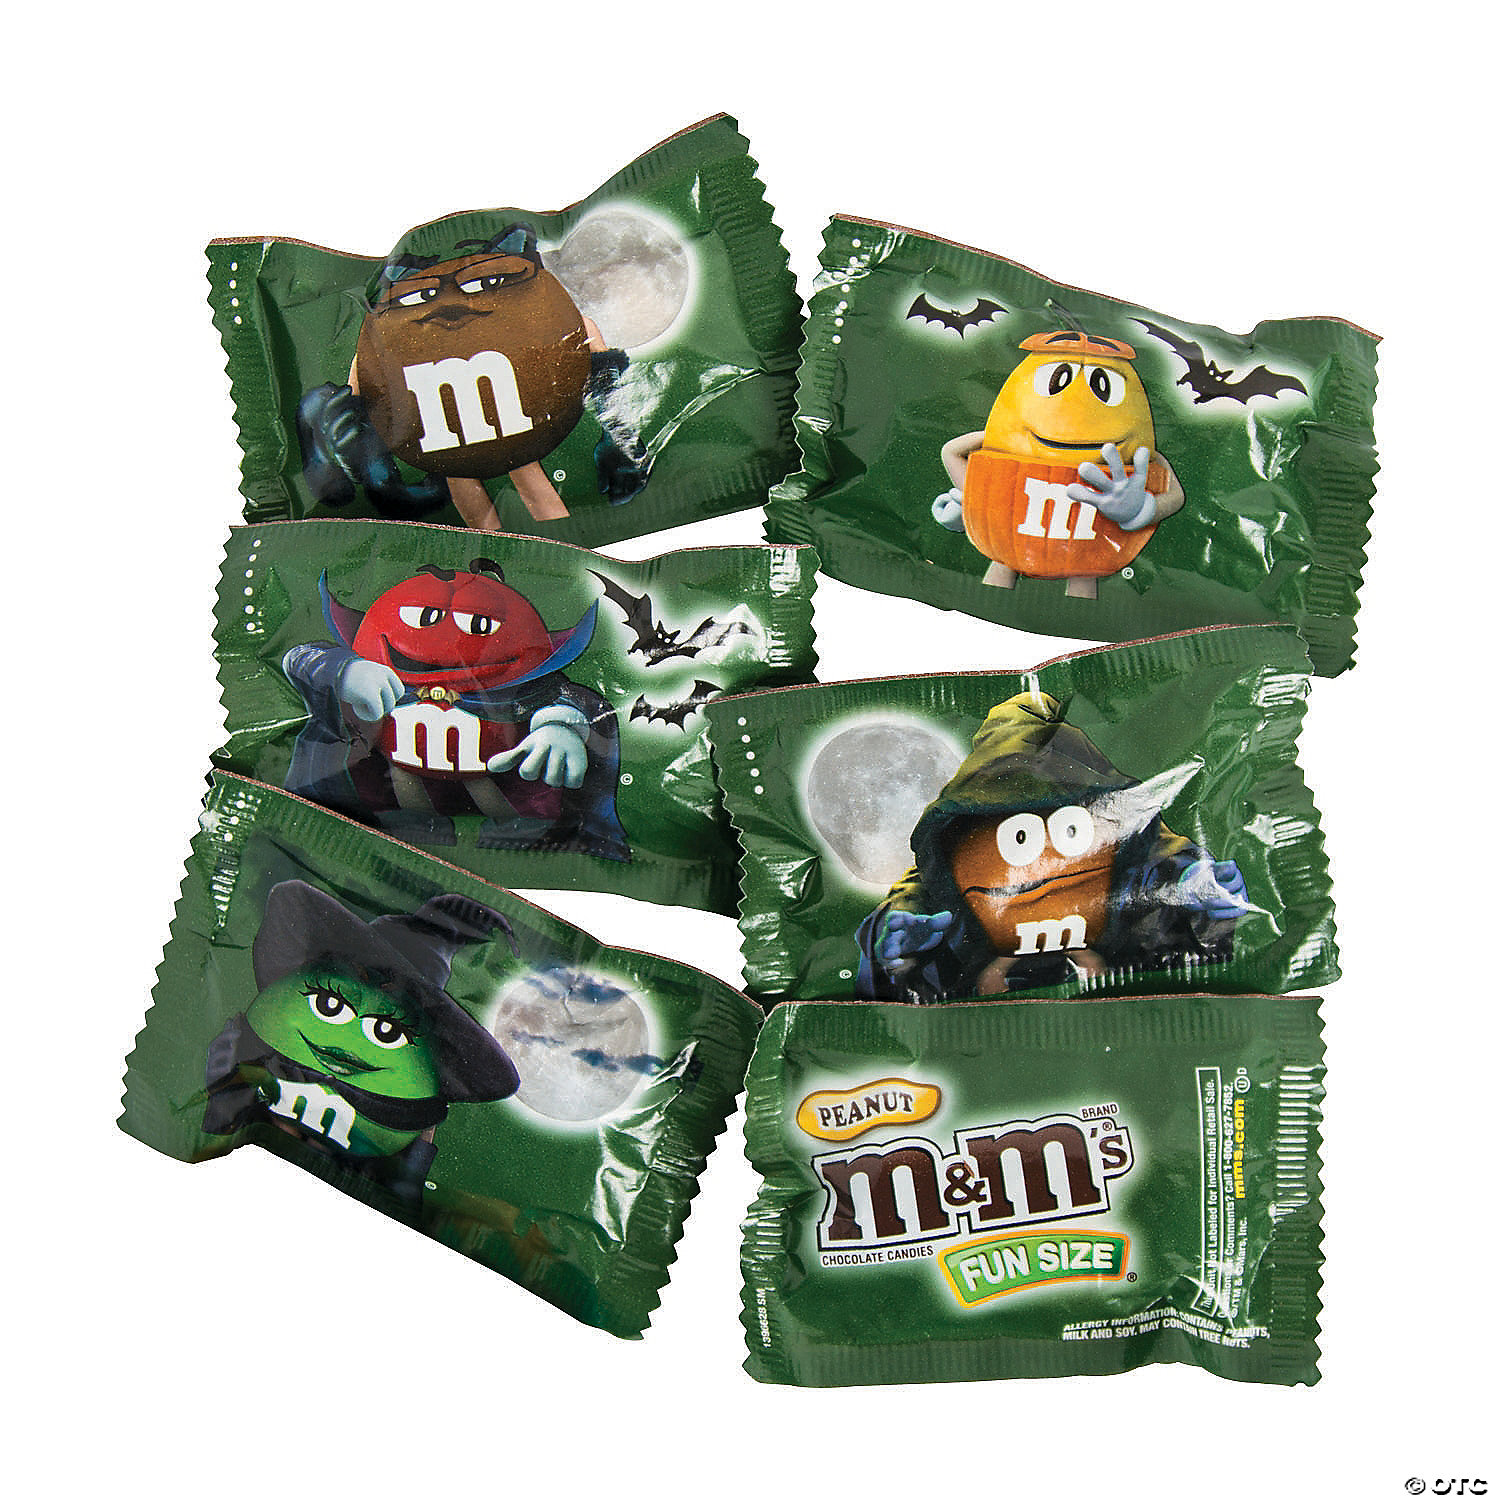 M&M'S Peanut Milk Chocolate Fun Size Candy Packs